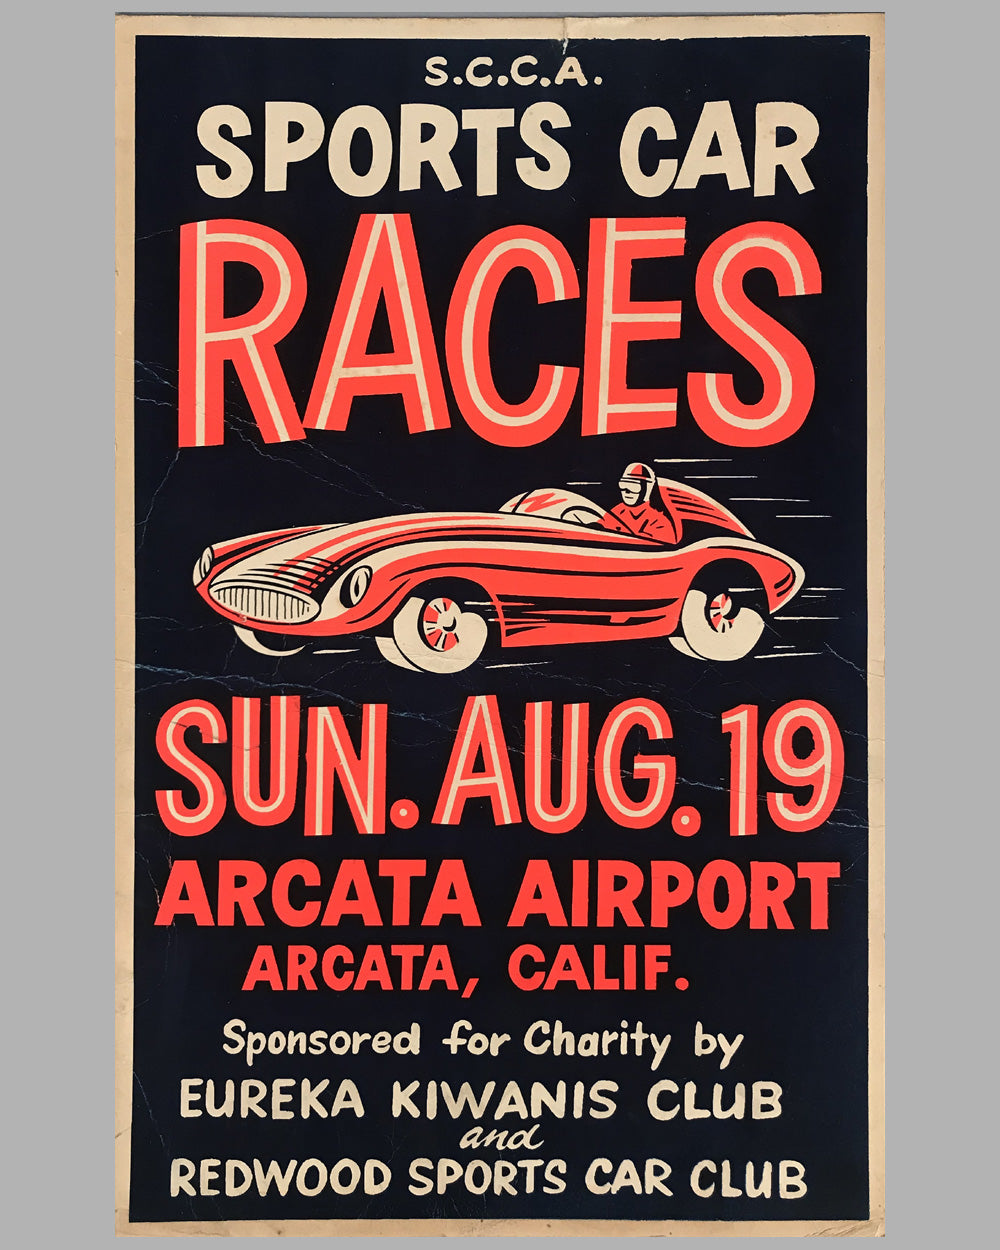 1956 SCCA Sports Car Races at Arcata Airport California poster